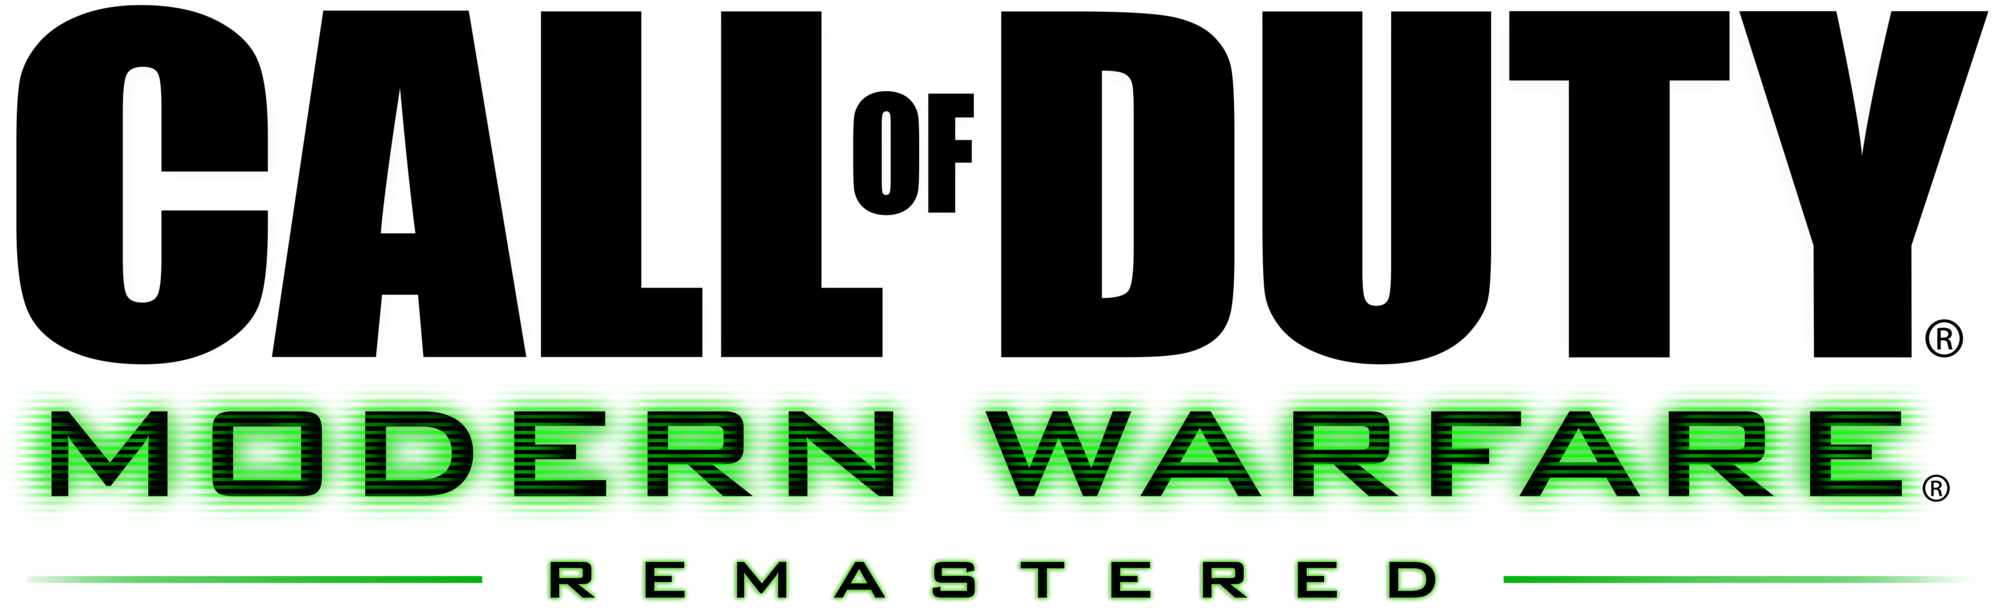 Call of Duty Modern Warfare Logo PNG High Quality Image